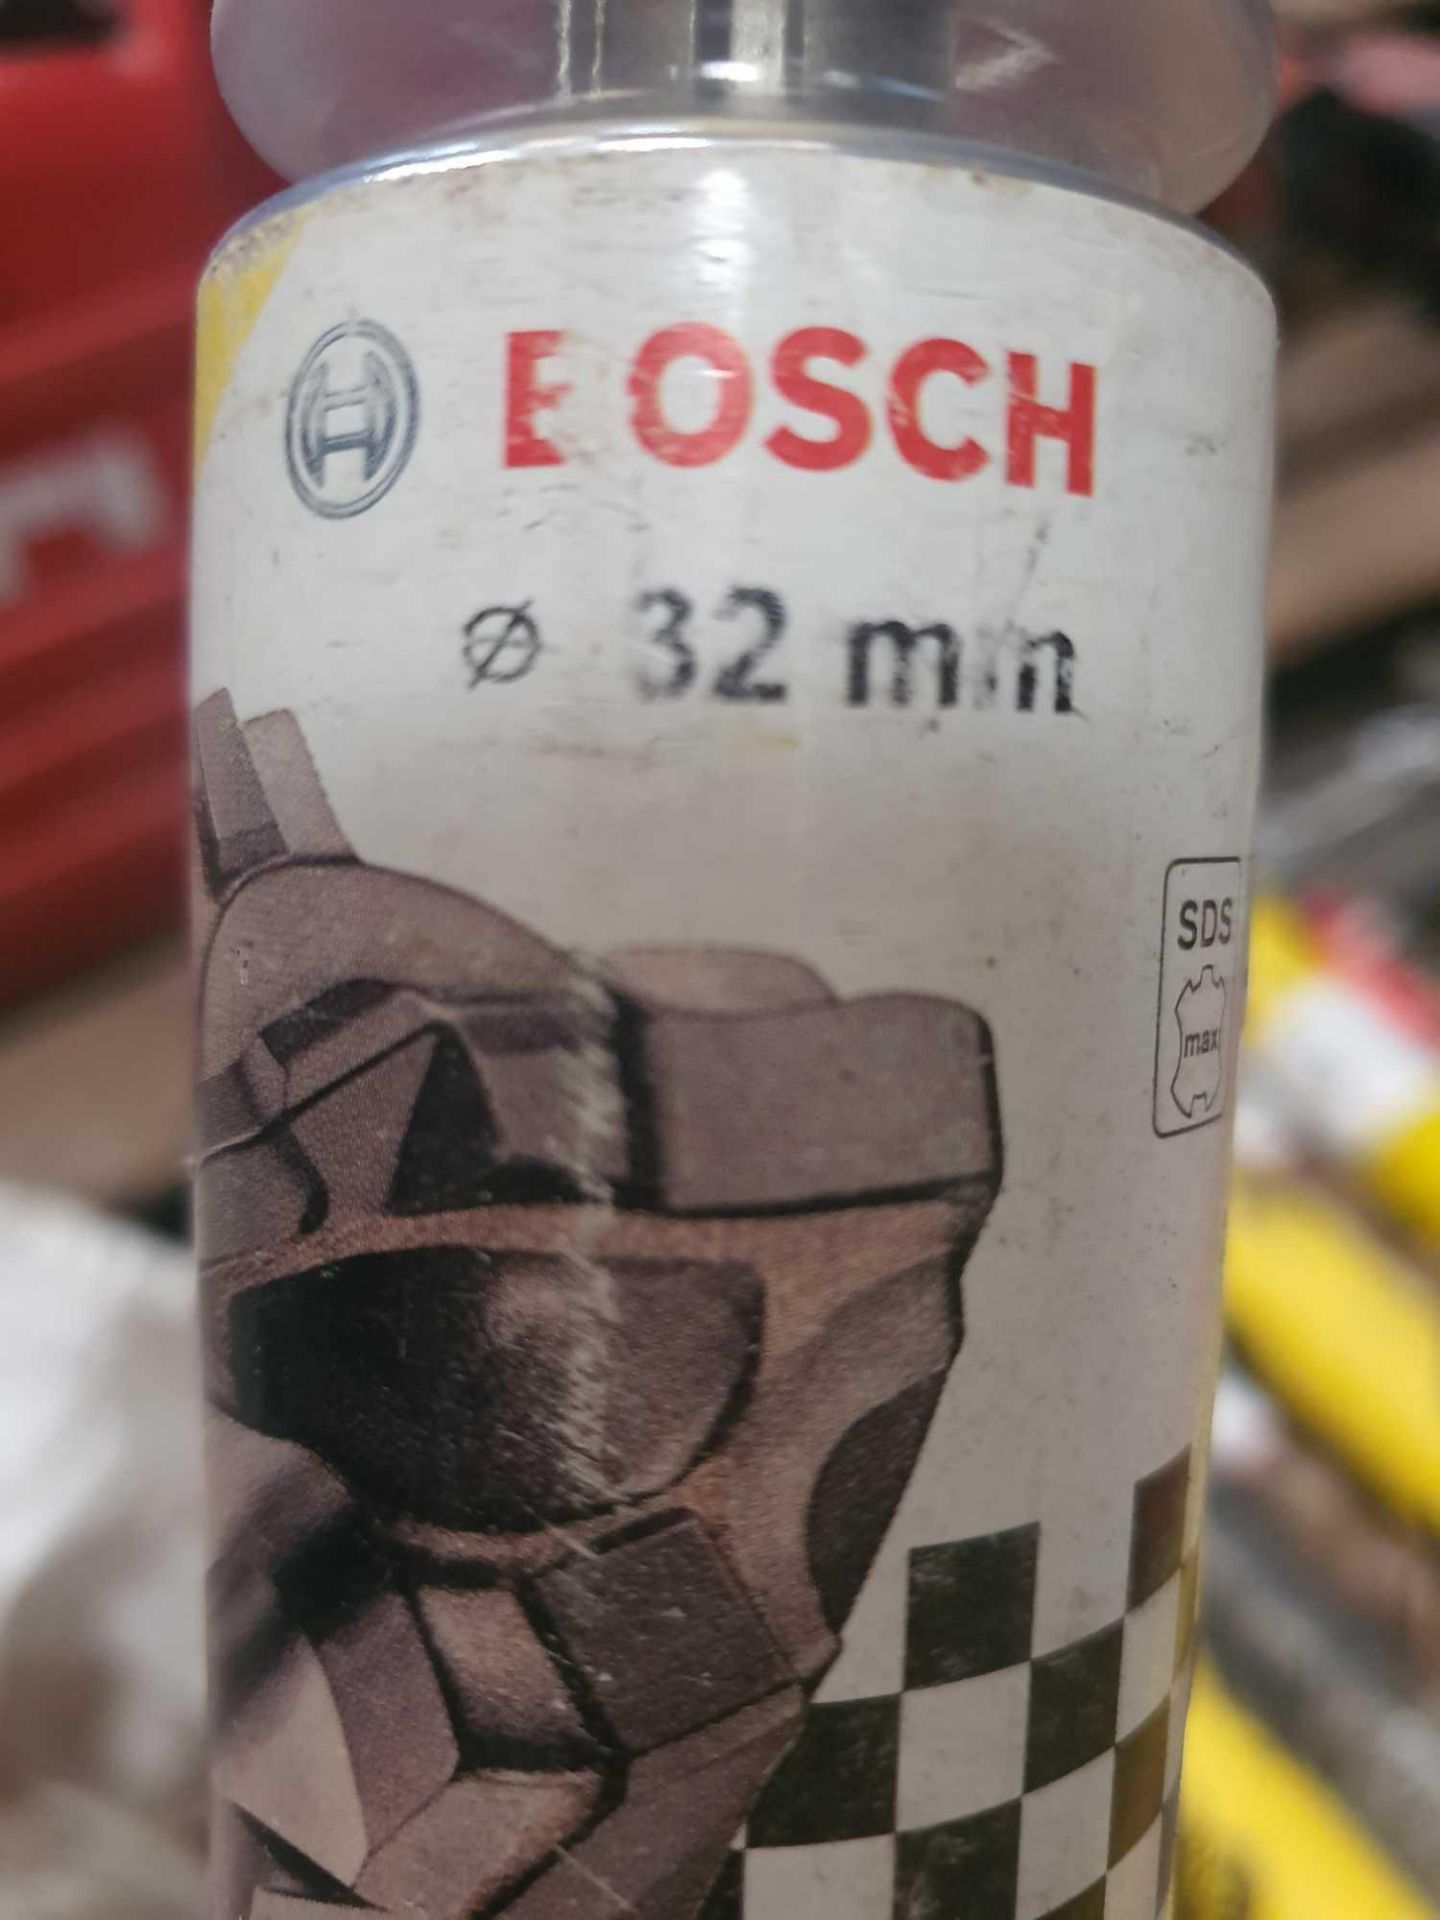 Bosch sds max 32mm drill bit - Image 2 of 3